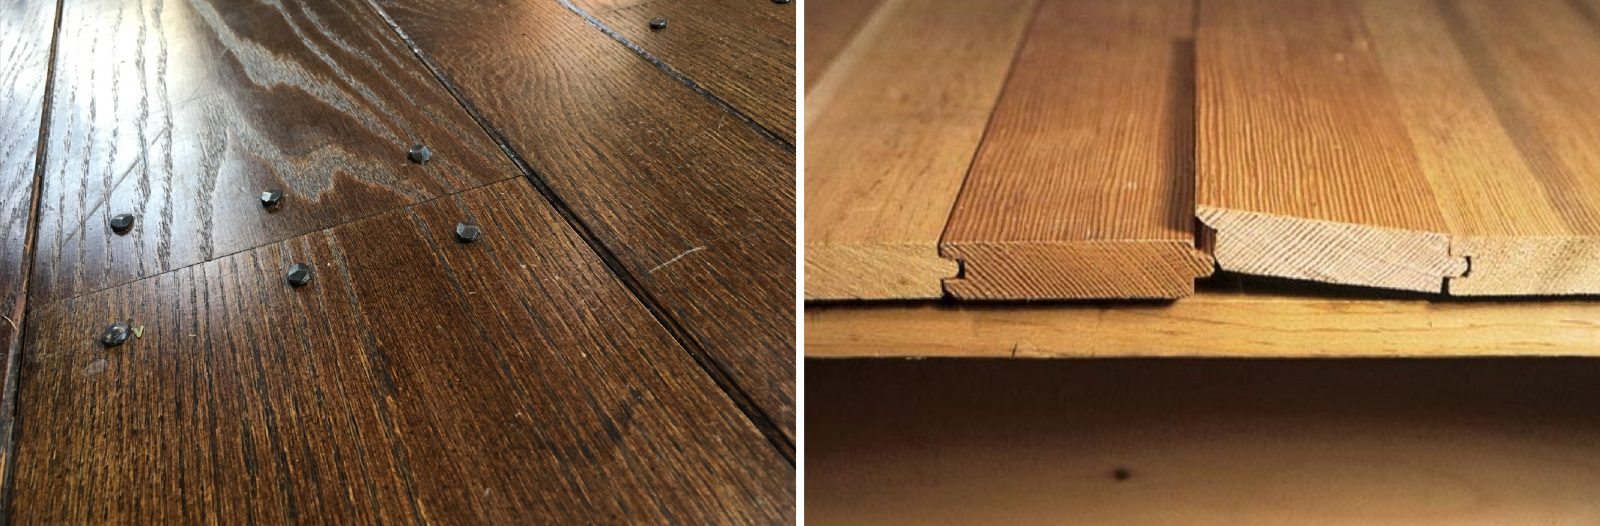 Nailed hardwood floor versus tongue-and-groove hardwood floor